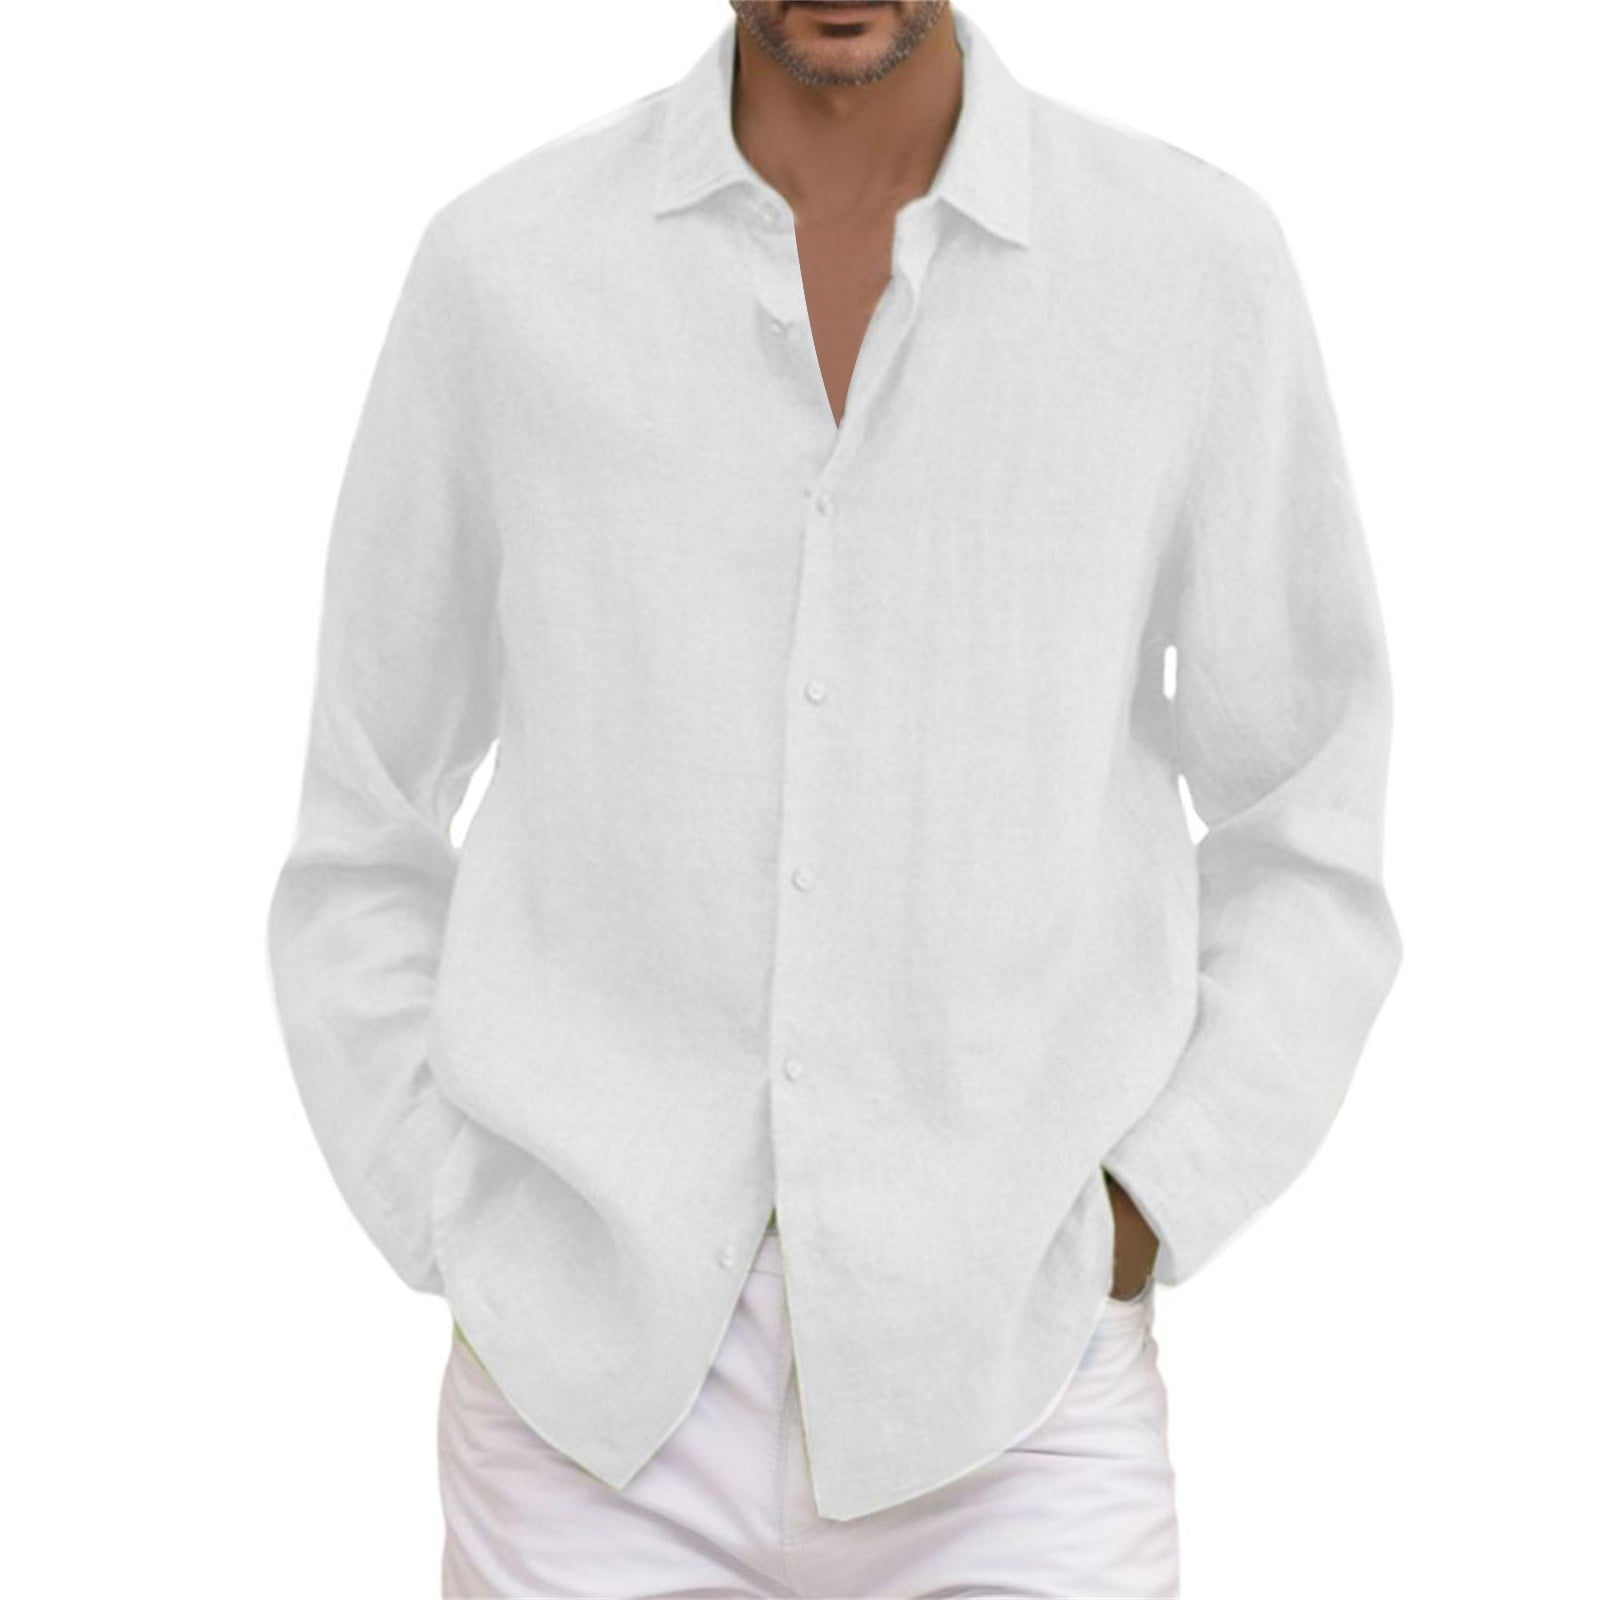 AdBFJAF Mens Dress Shirts Slim Fit White Male Summer Cotton Solid ...